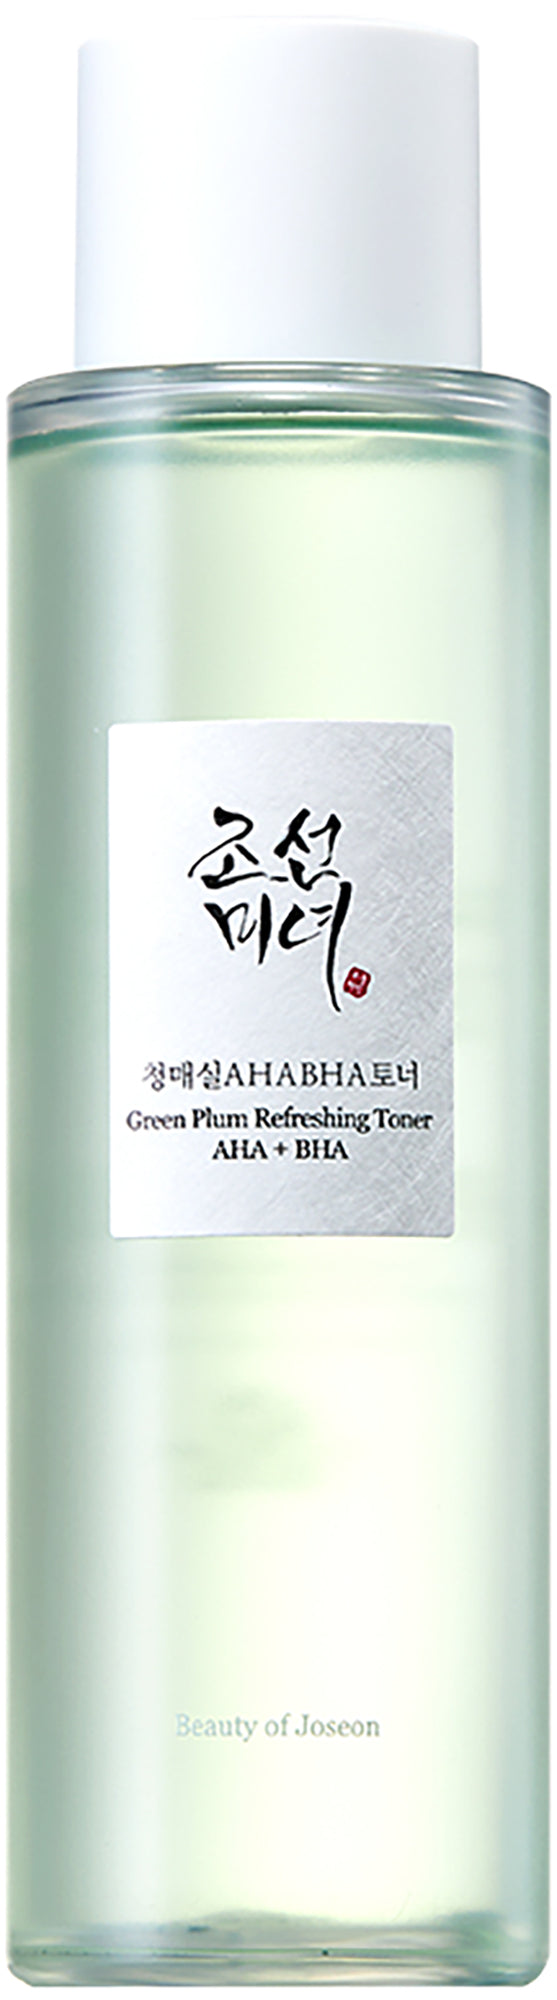 Beauty Of Joseon Green Plum Refreshing Toner AHA+BHA 150ml